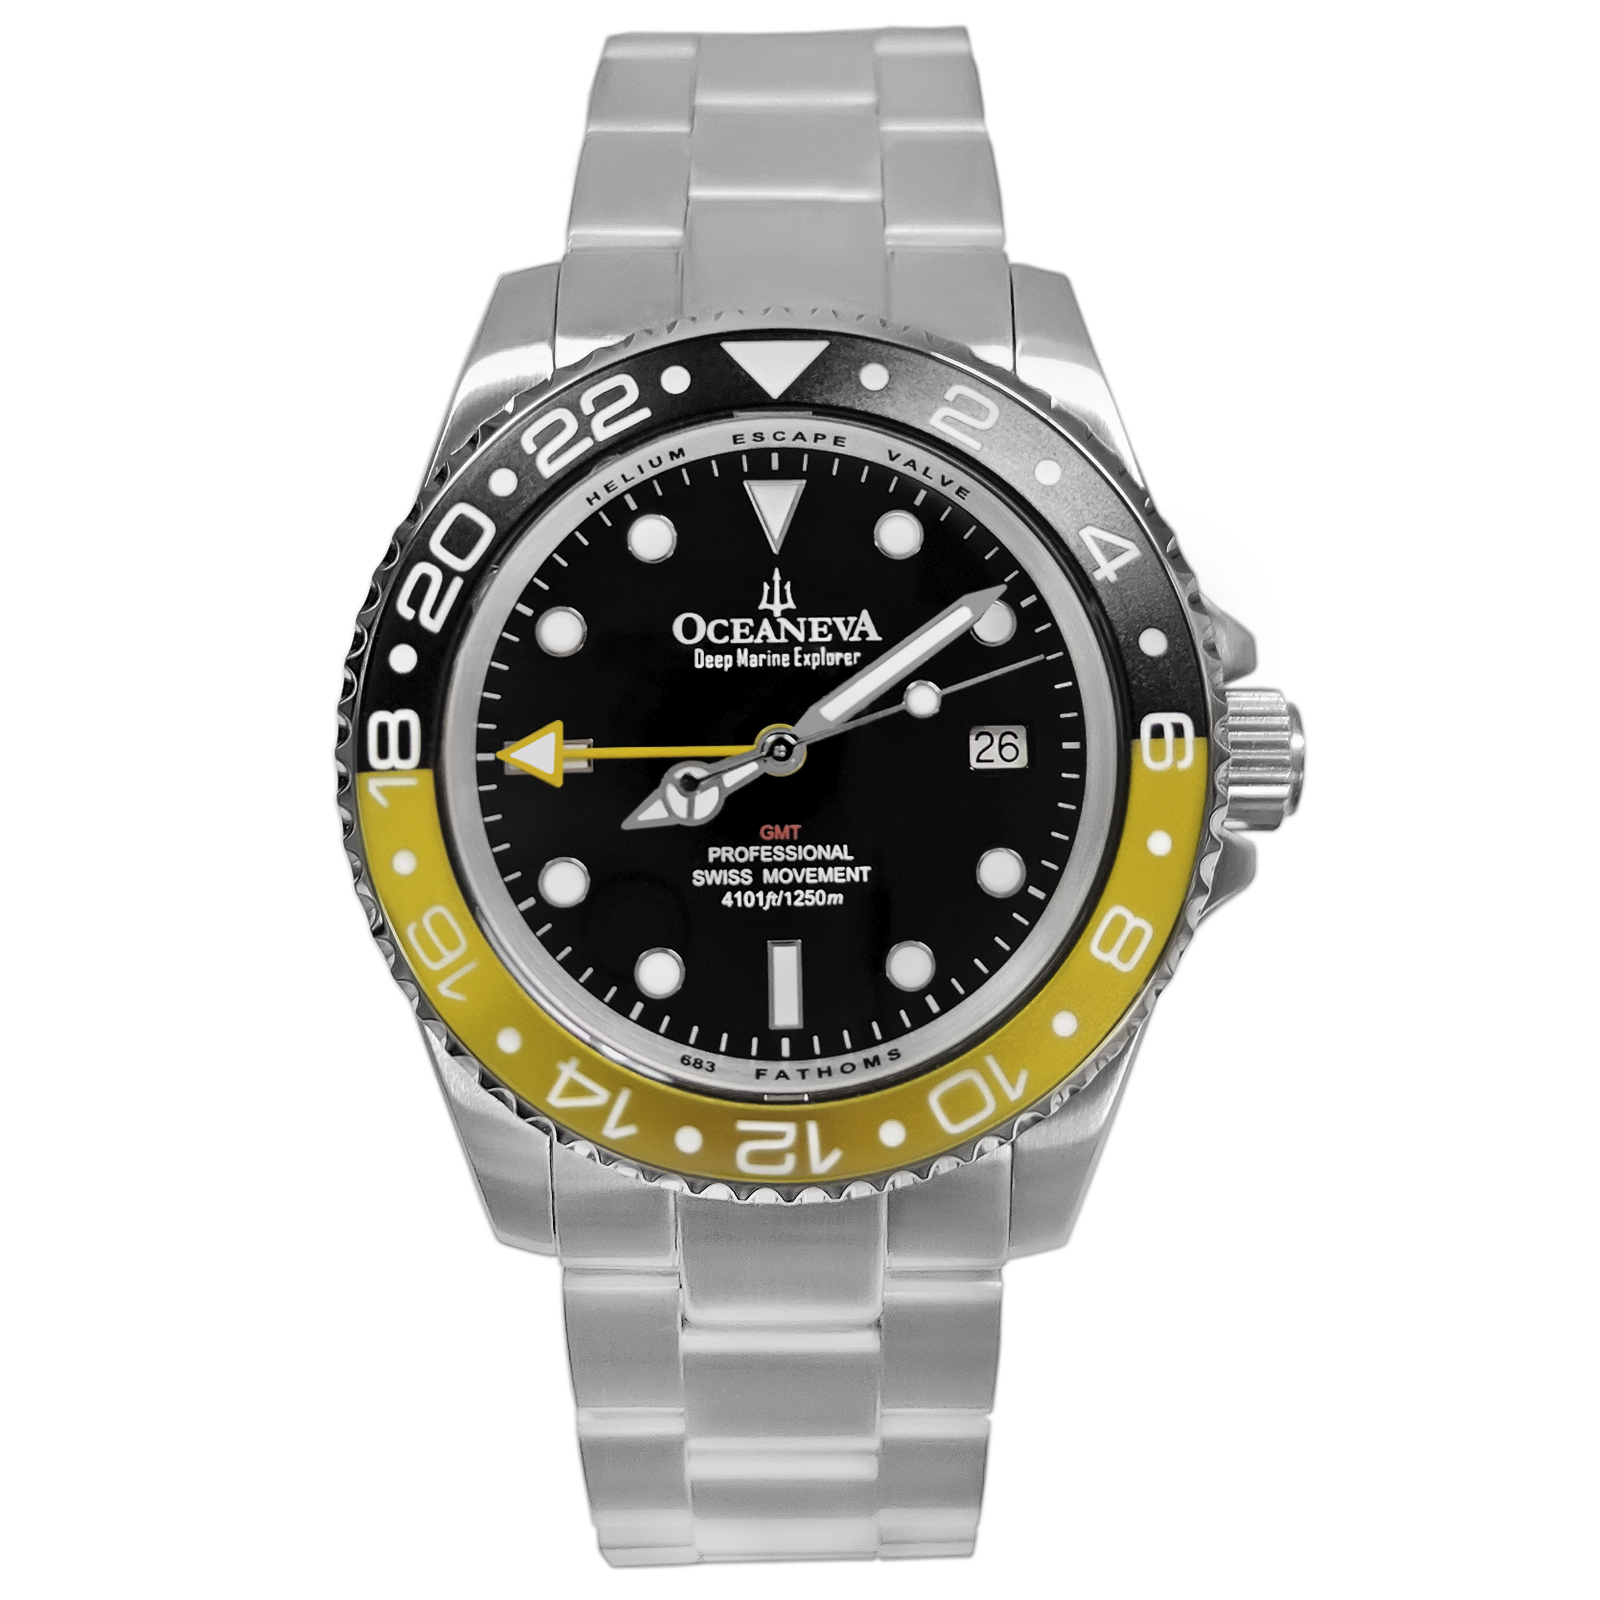 Pre-owned Oceaneva " Oceaneva Men's Deep Marine Explorer Gmt 1250m Pro Diver Watch Yellow And Black